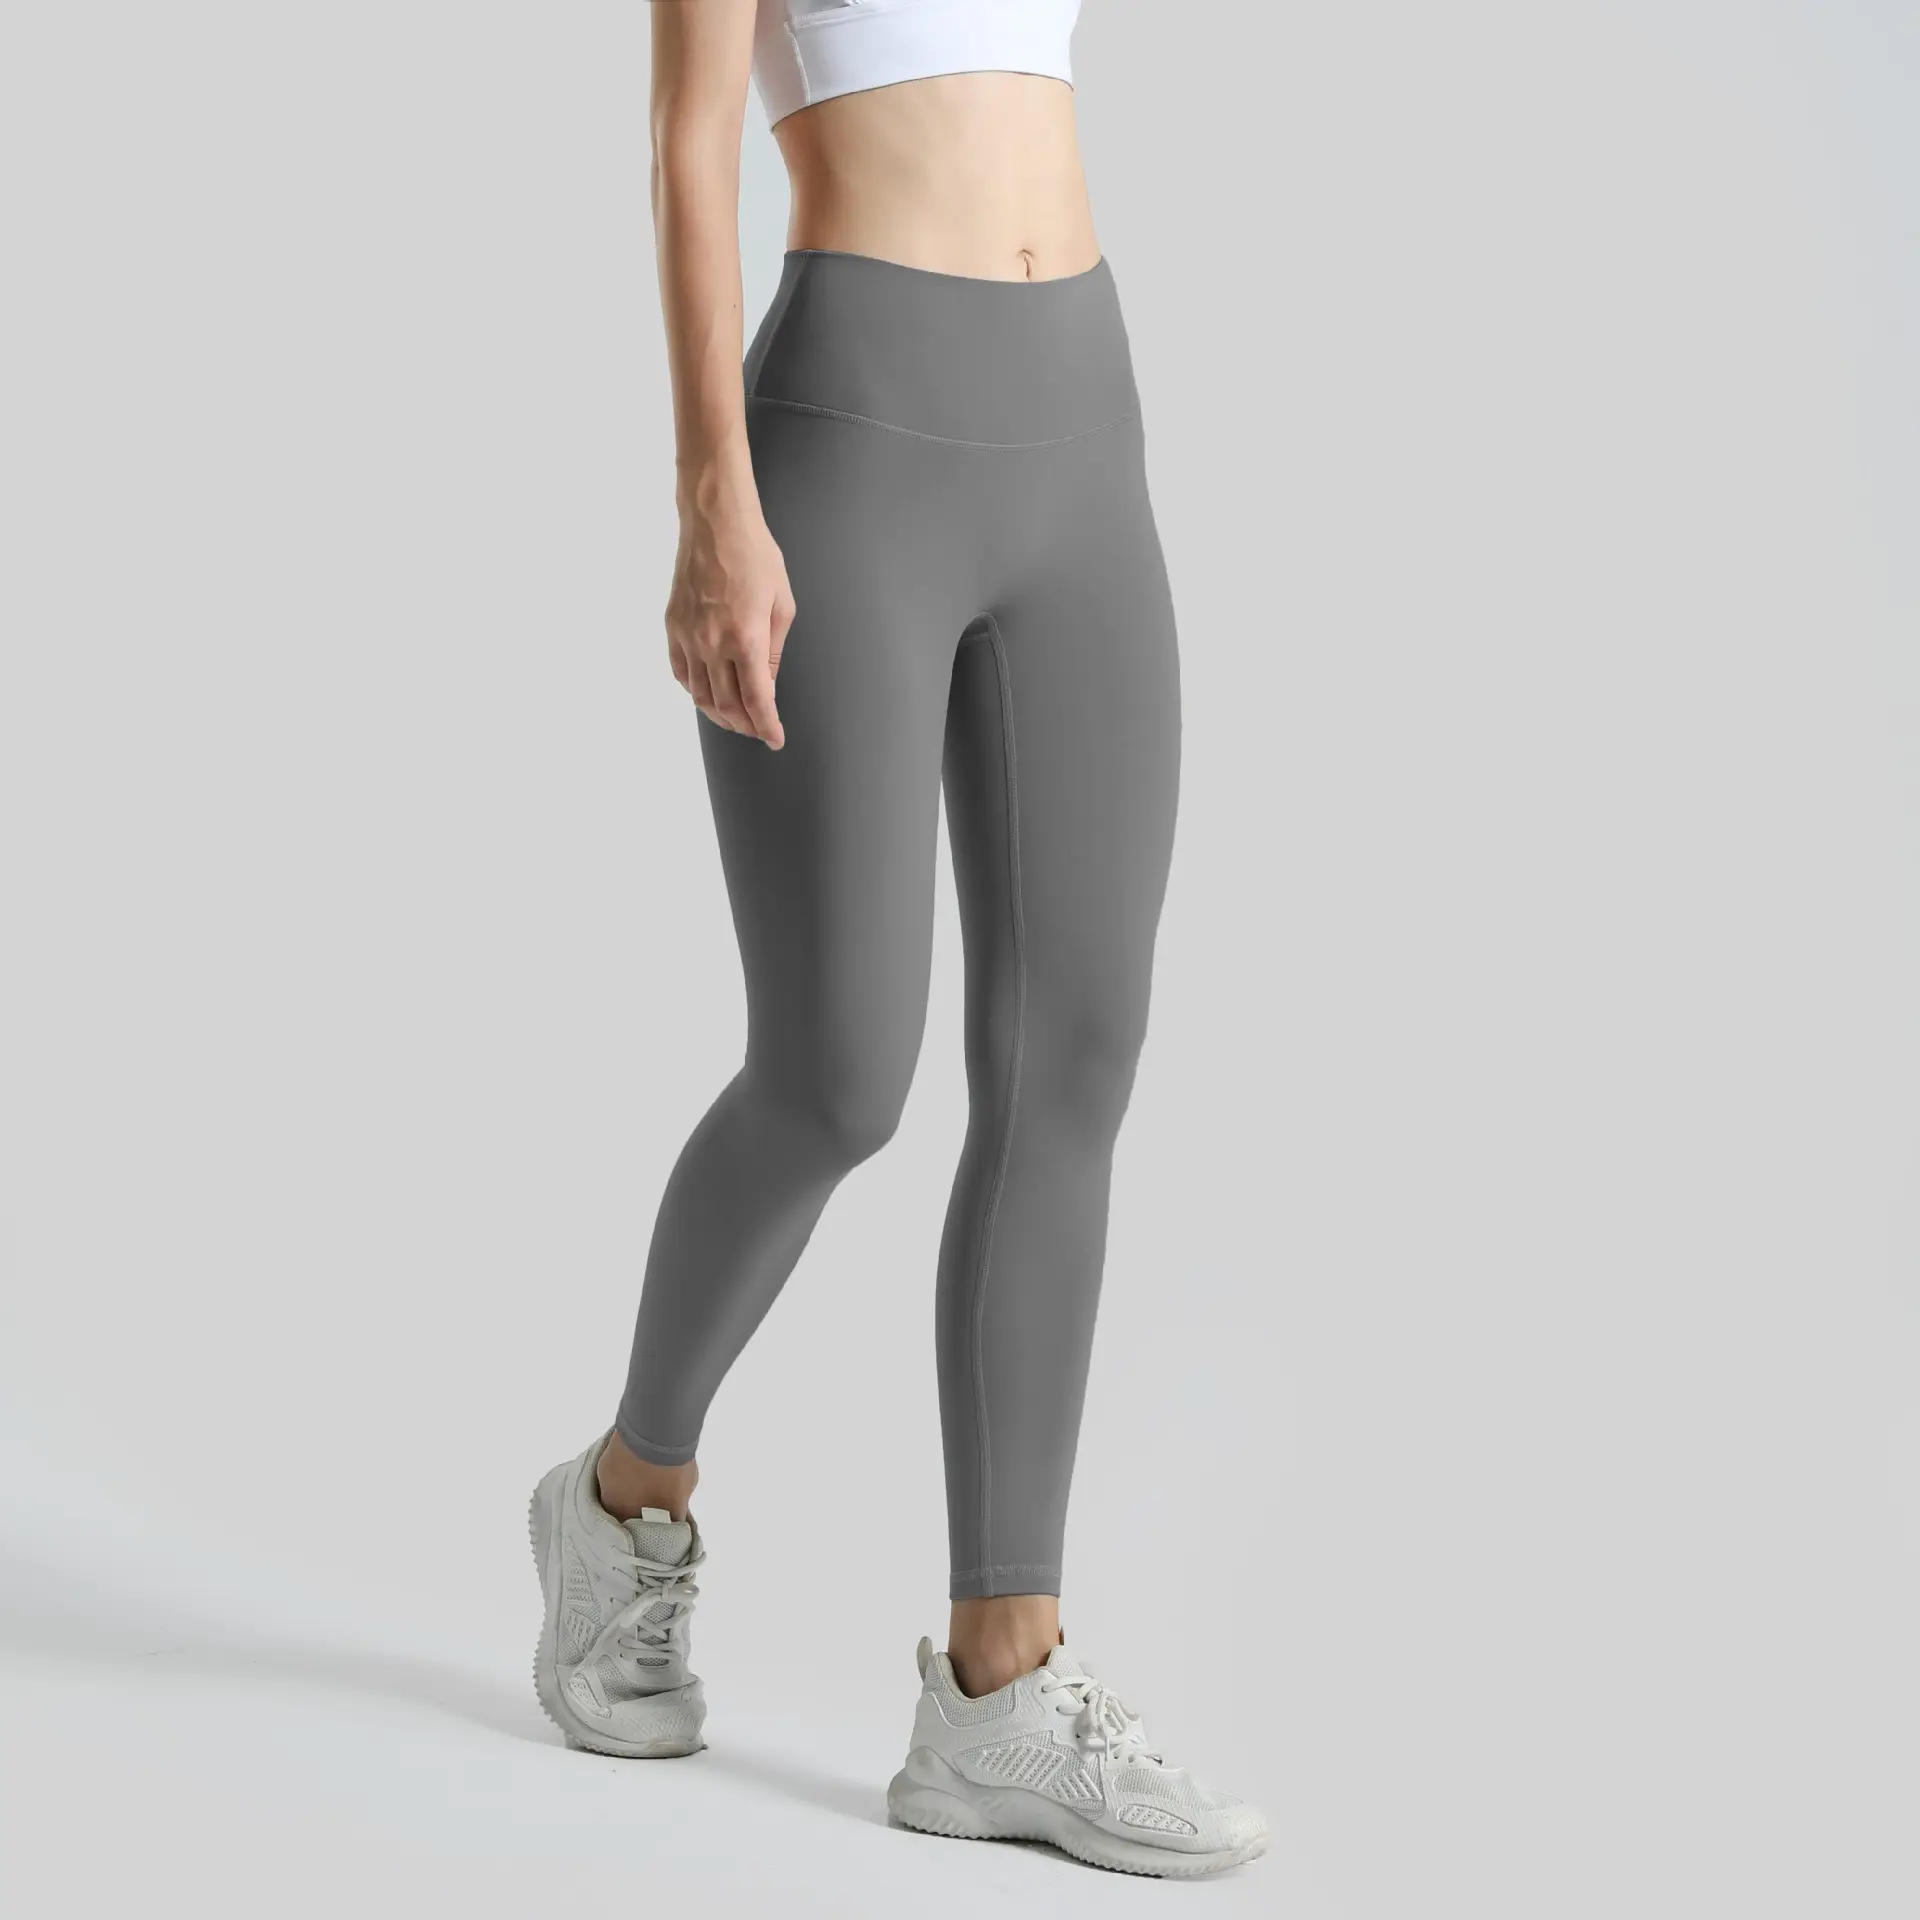 Celana panjang daur ulang ramah lingkungan kualitas tinggi elastis tinggi warna Solid legging olahraga wanita legging olahraga angkat bokong